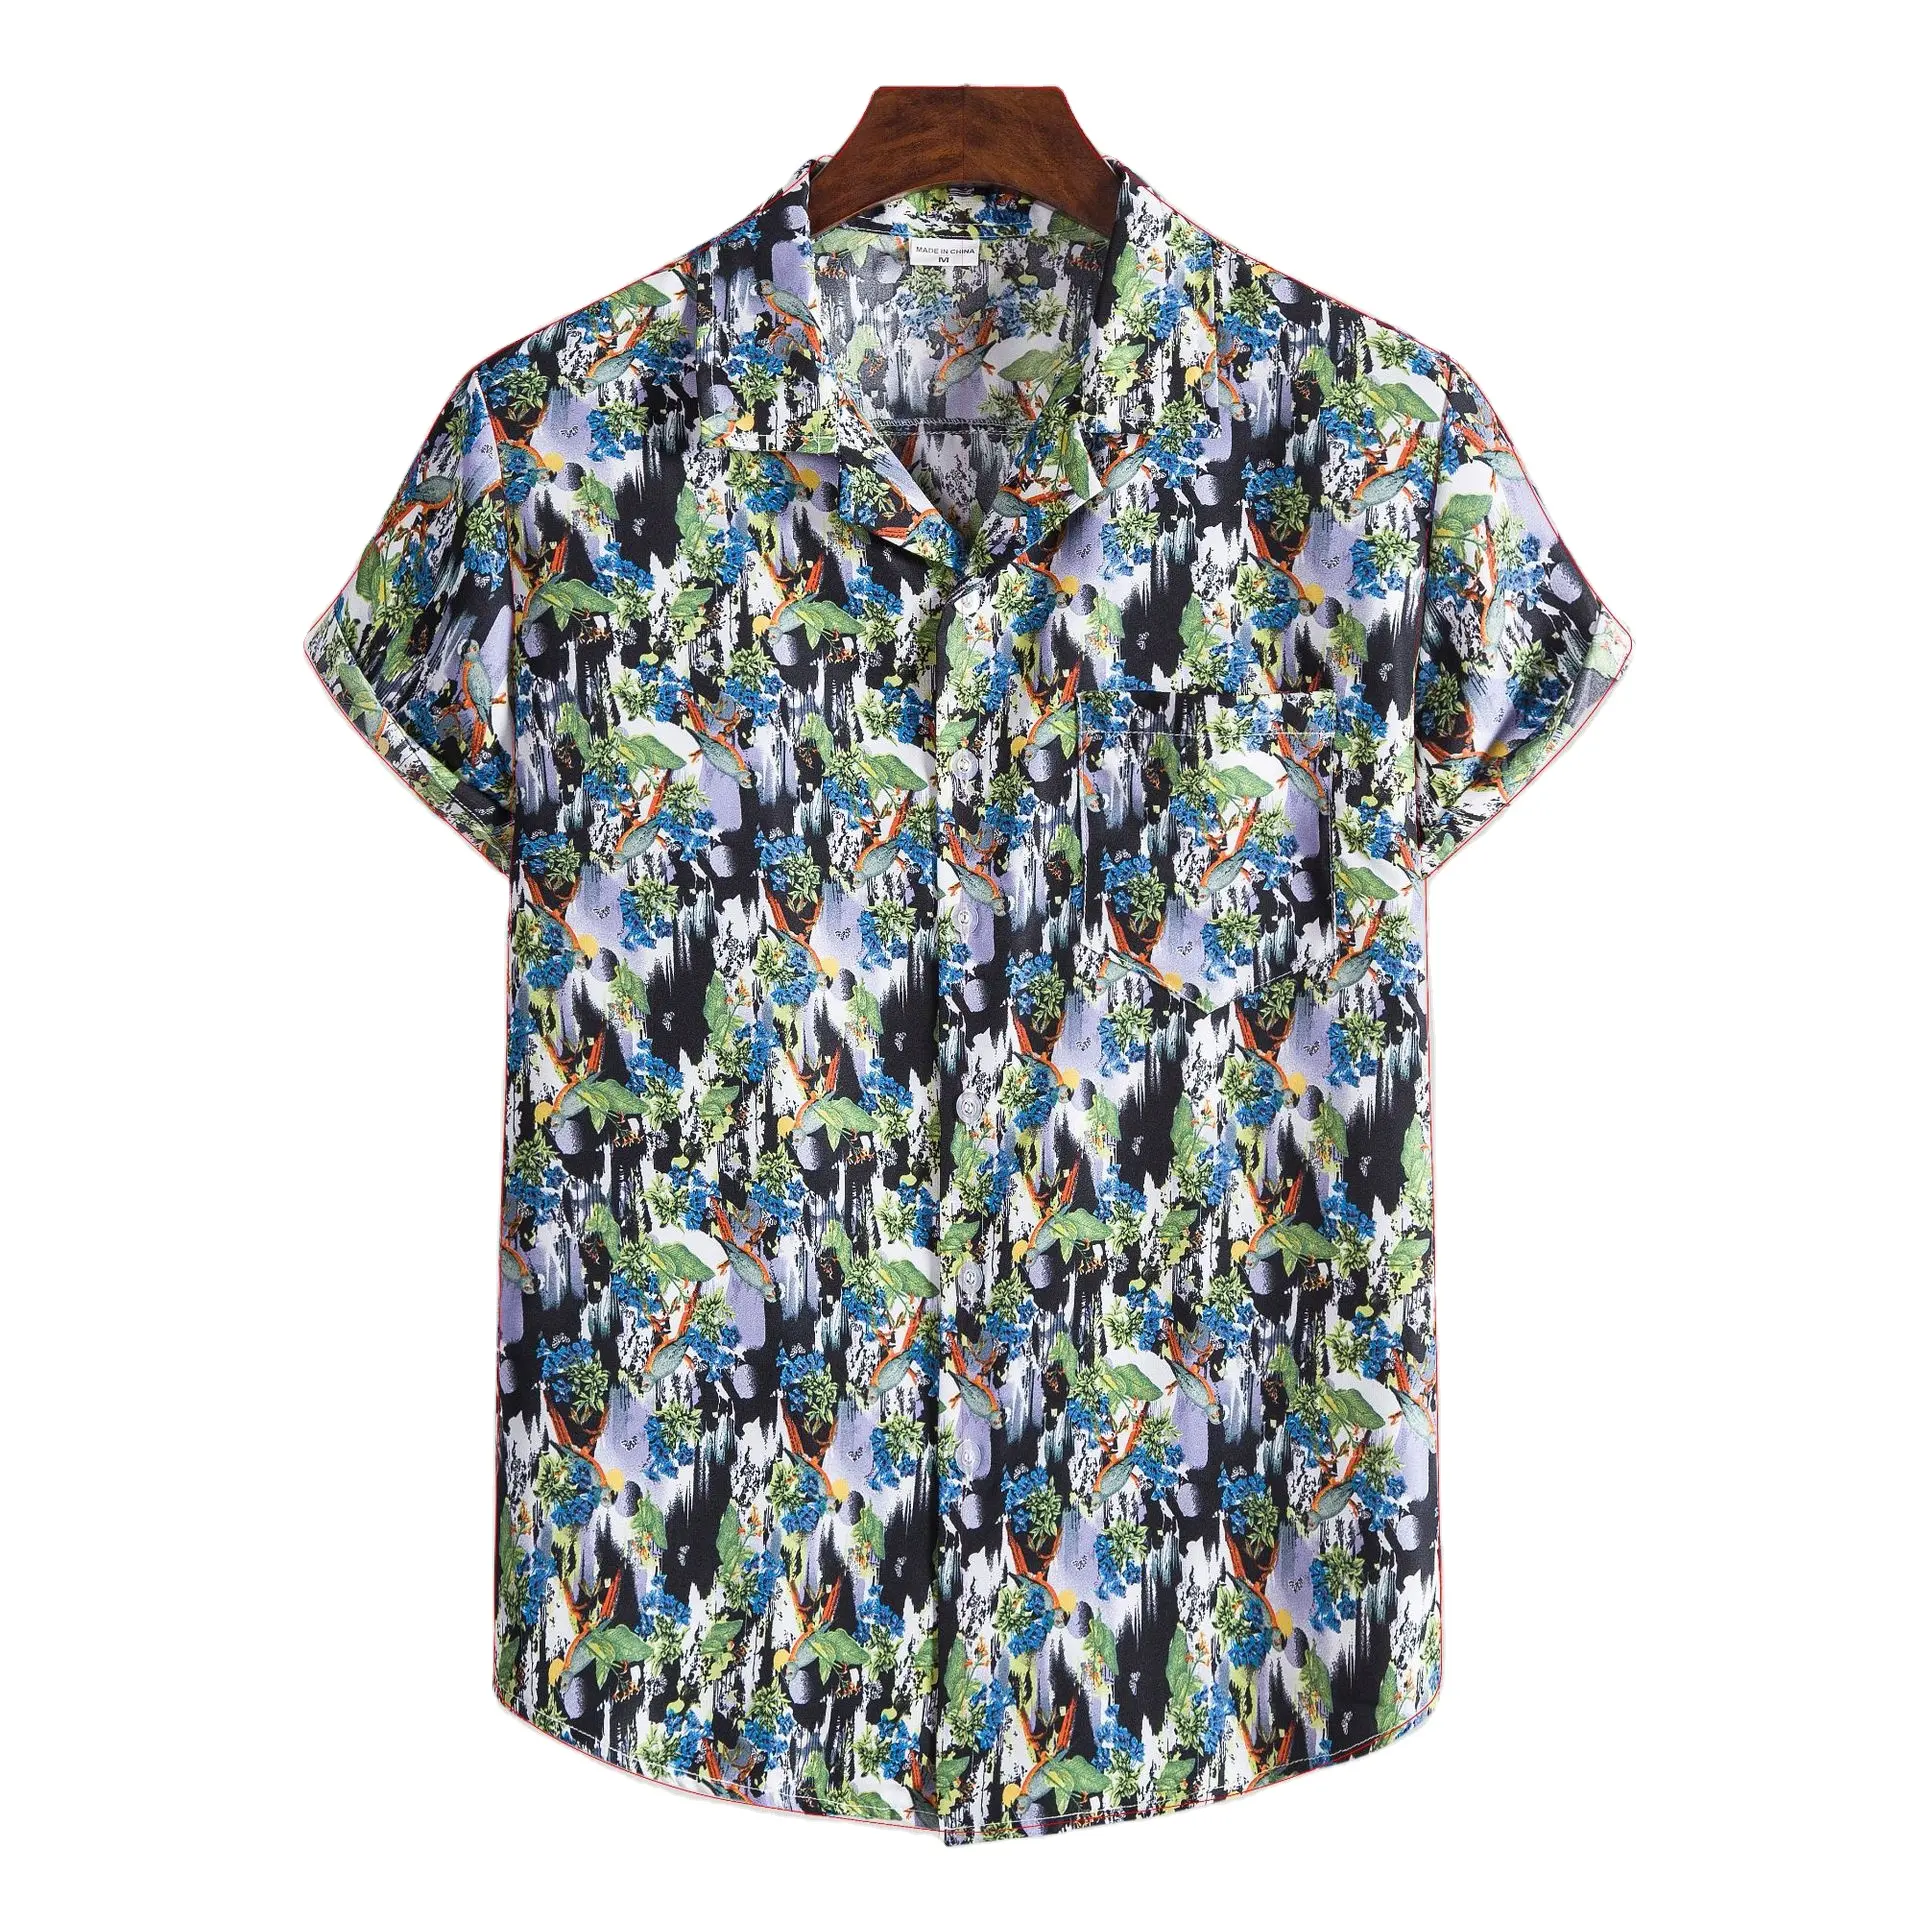 Hot style men's 2021 new summer dress men's floral fashion short-sleeved casual shirt slim shirt